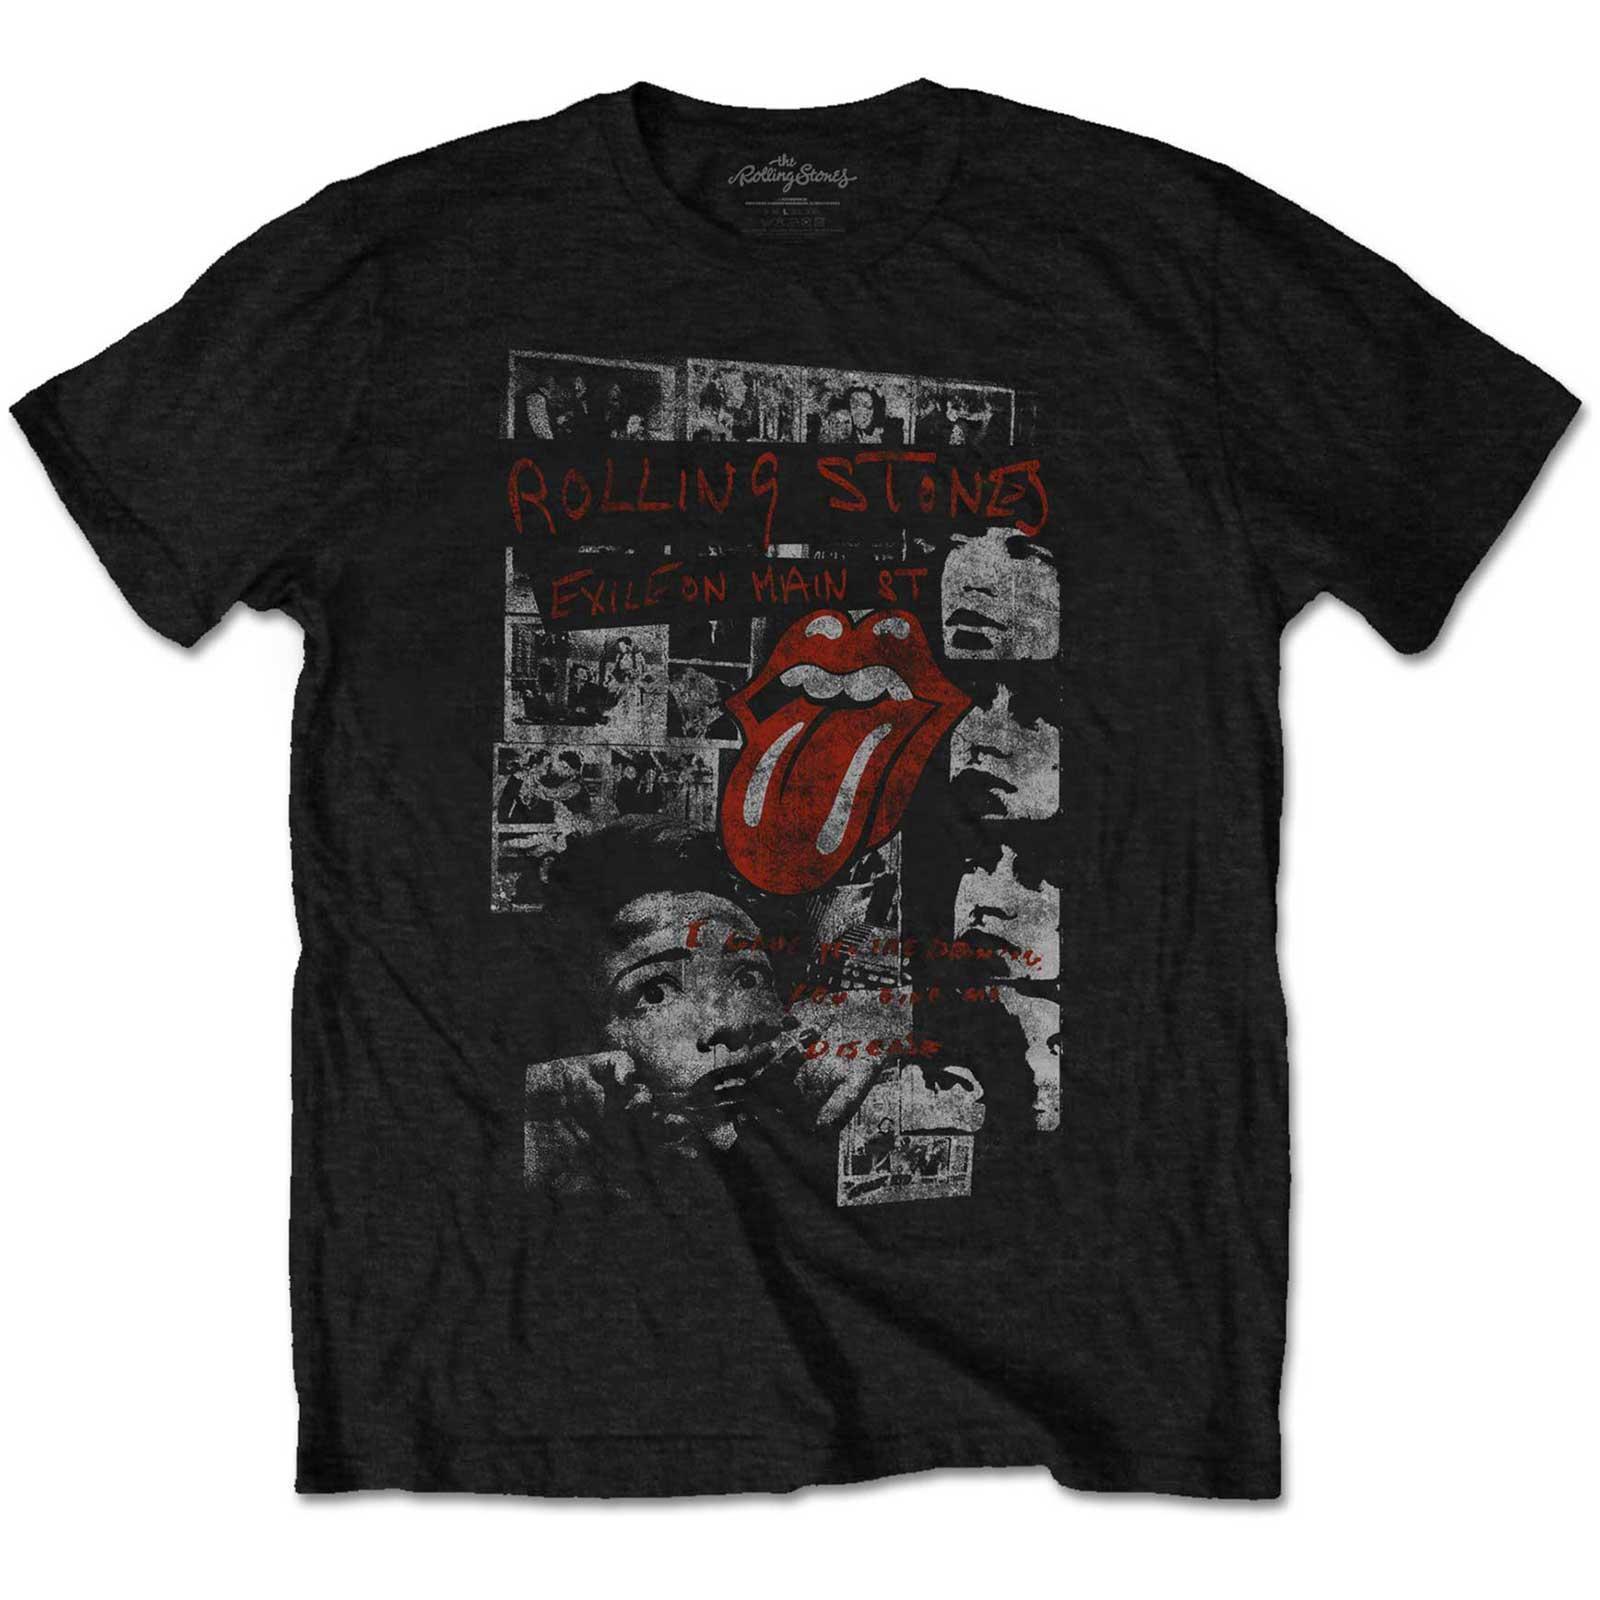 The Rolling Stones Unisex Adult Elite Faded Cotton T-Shirt (Black) (XL)